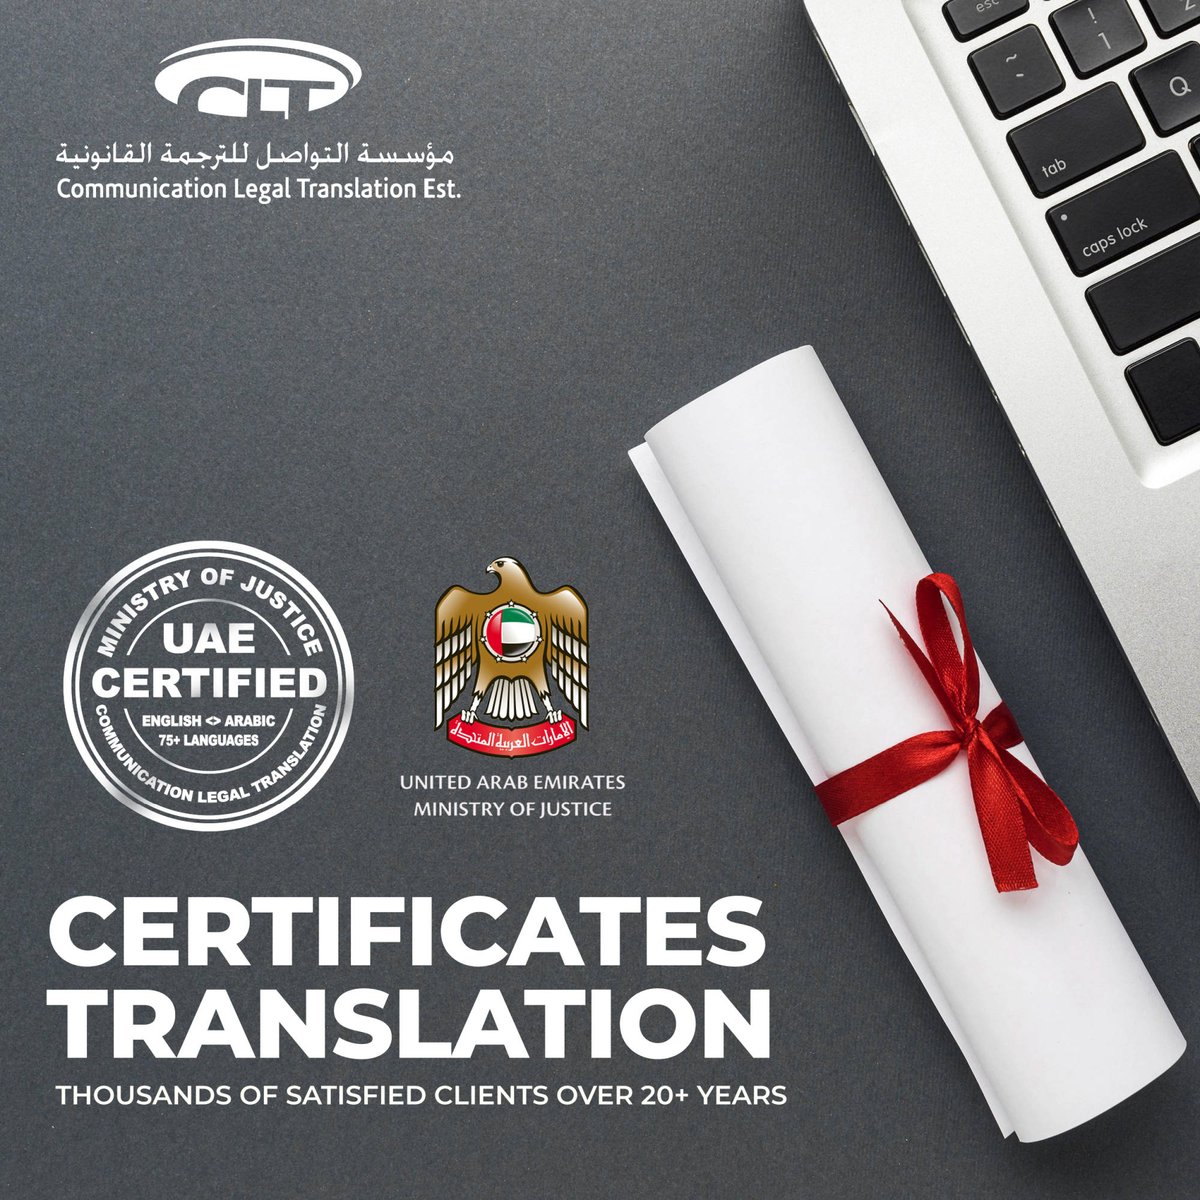 Certificates Translation Services   

Call / WhatsApp: +971 502885313 I +971 42663517
bit.ly/48oMwVU

#CertificateTranslation